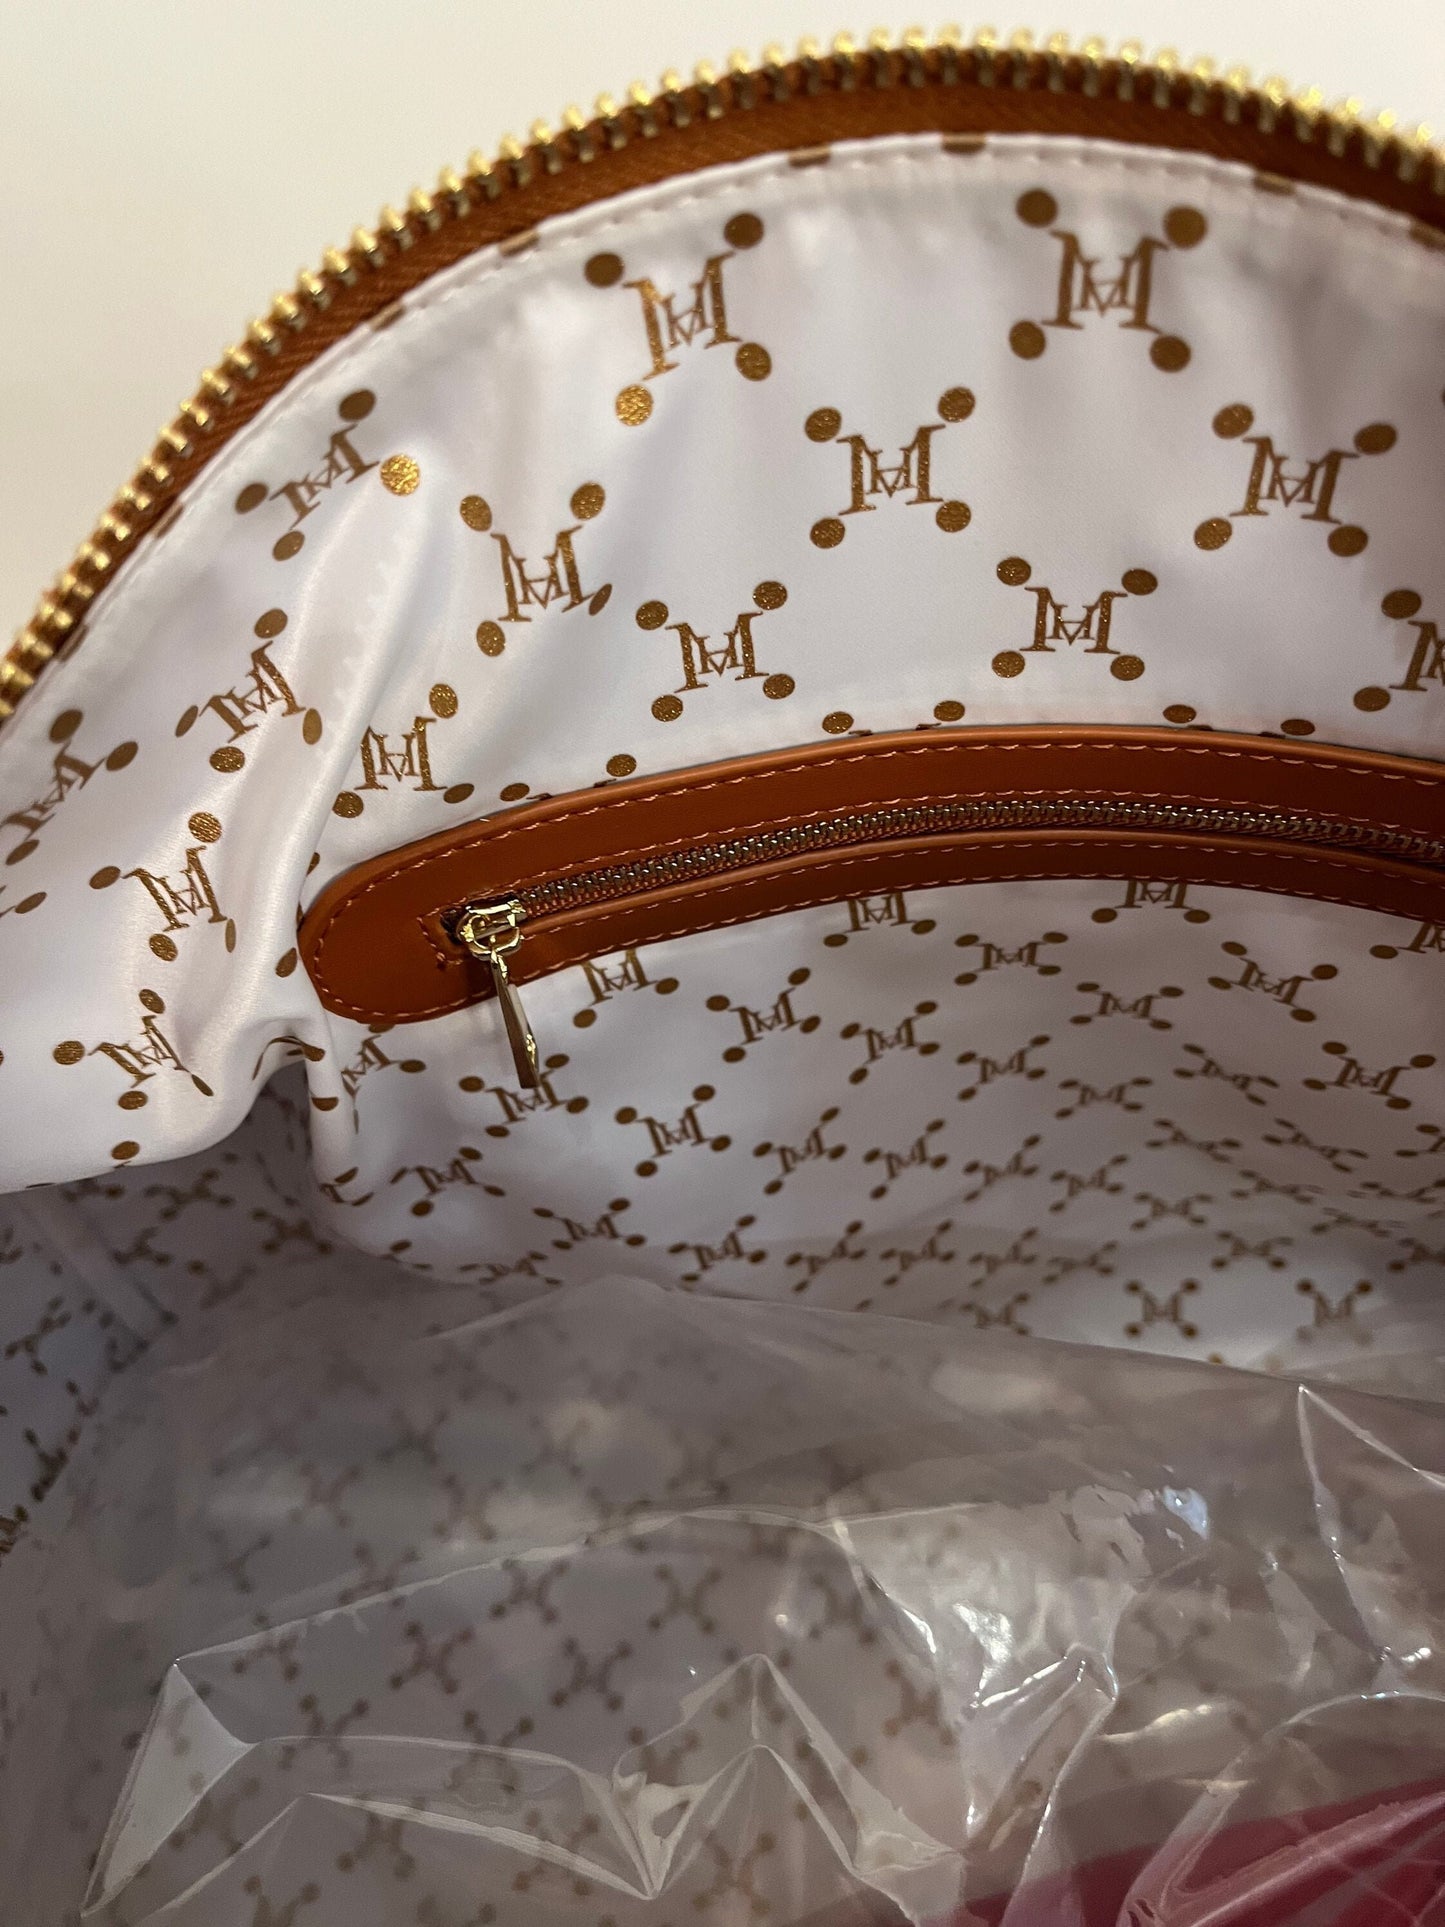 Brown Duffel bag Designed by MAGIC HILL Mercantile vegan Grade A Leather